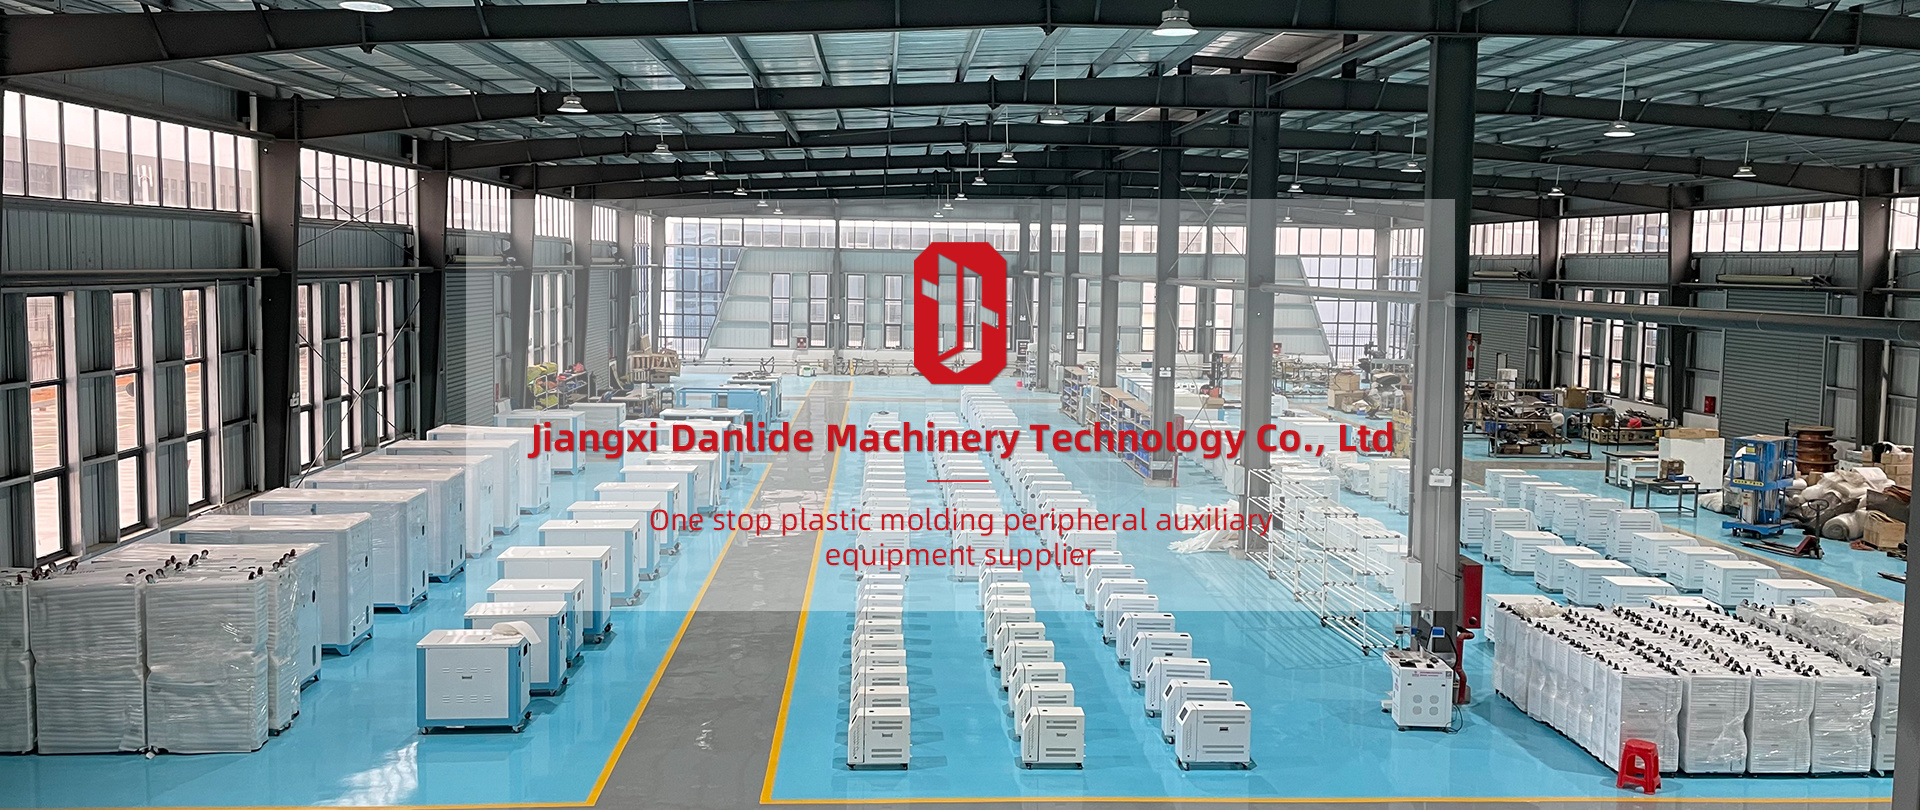 Jiangxi Danlead Machinery Technology Co., Ltd